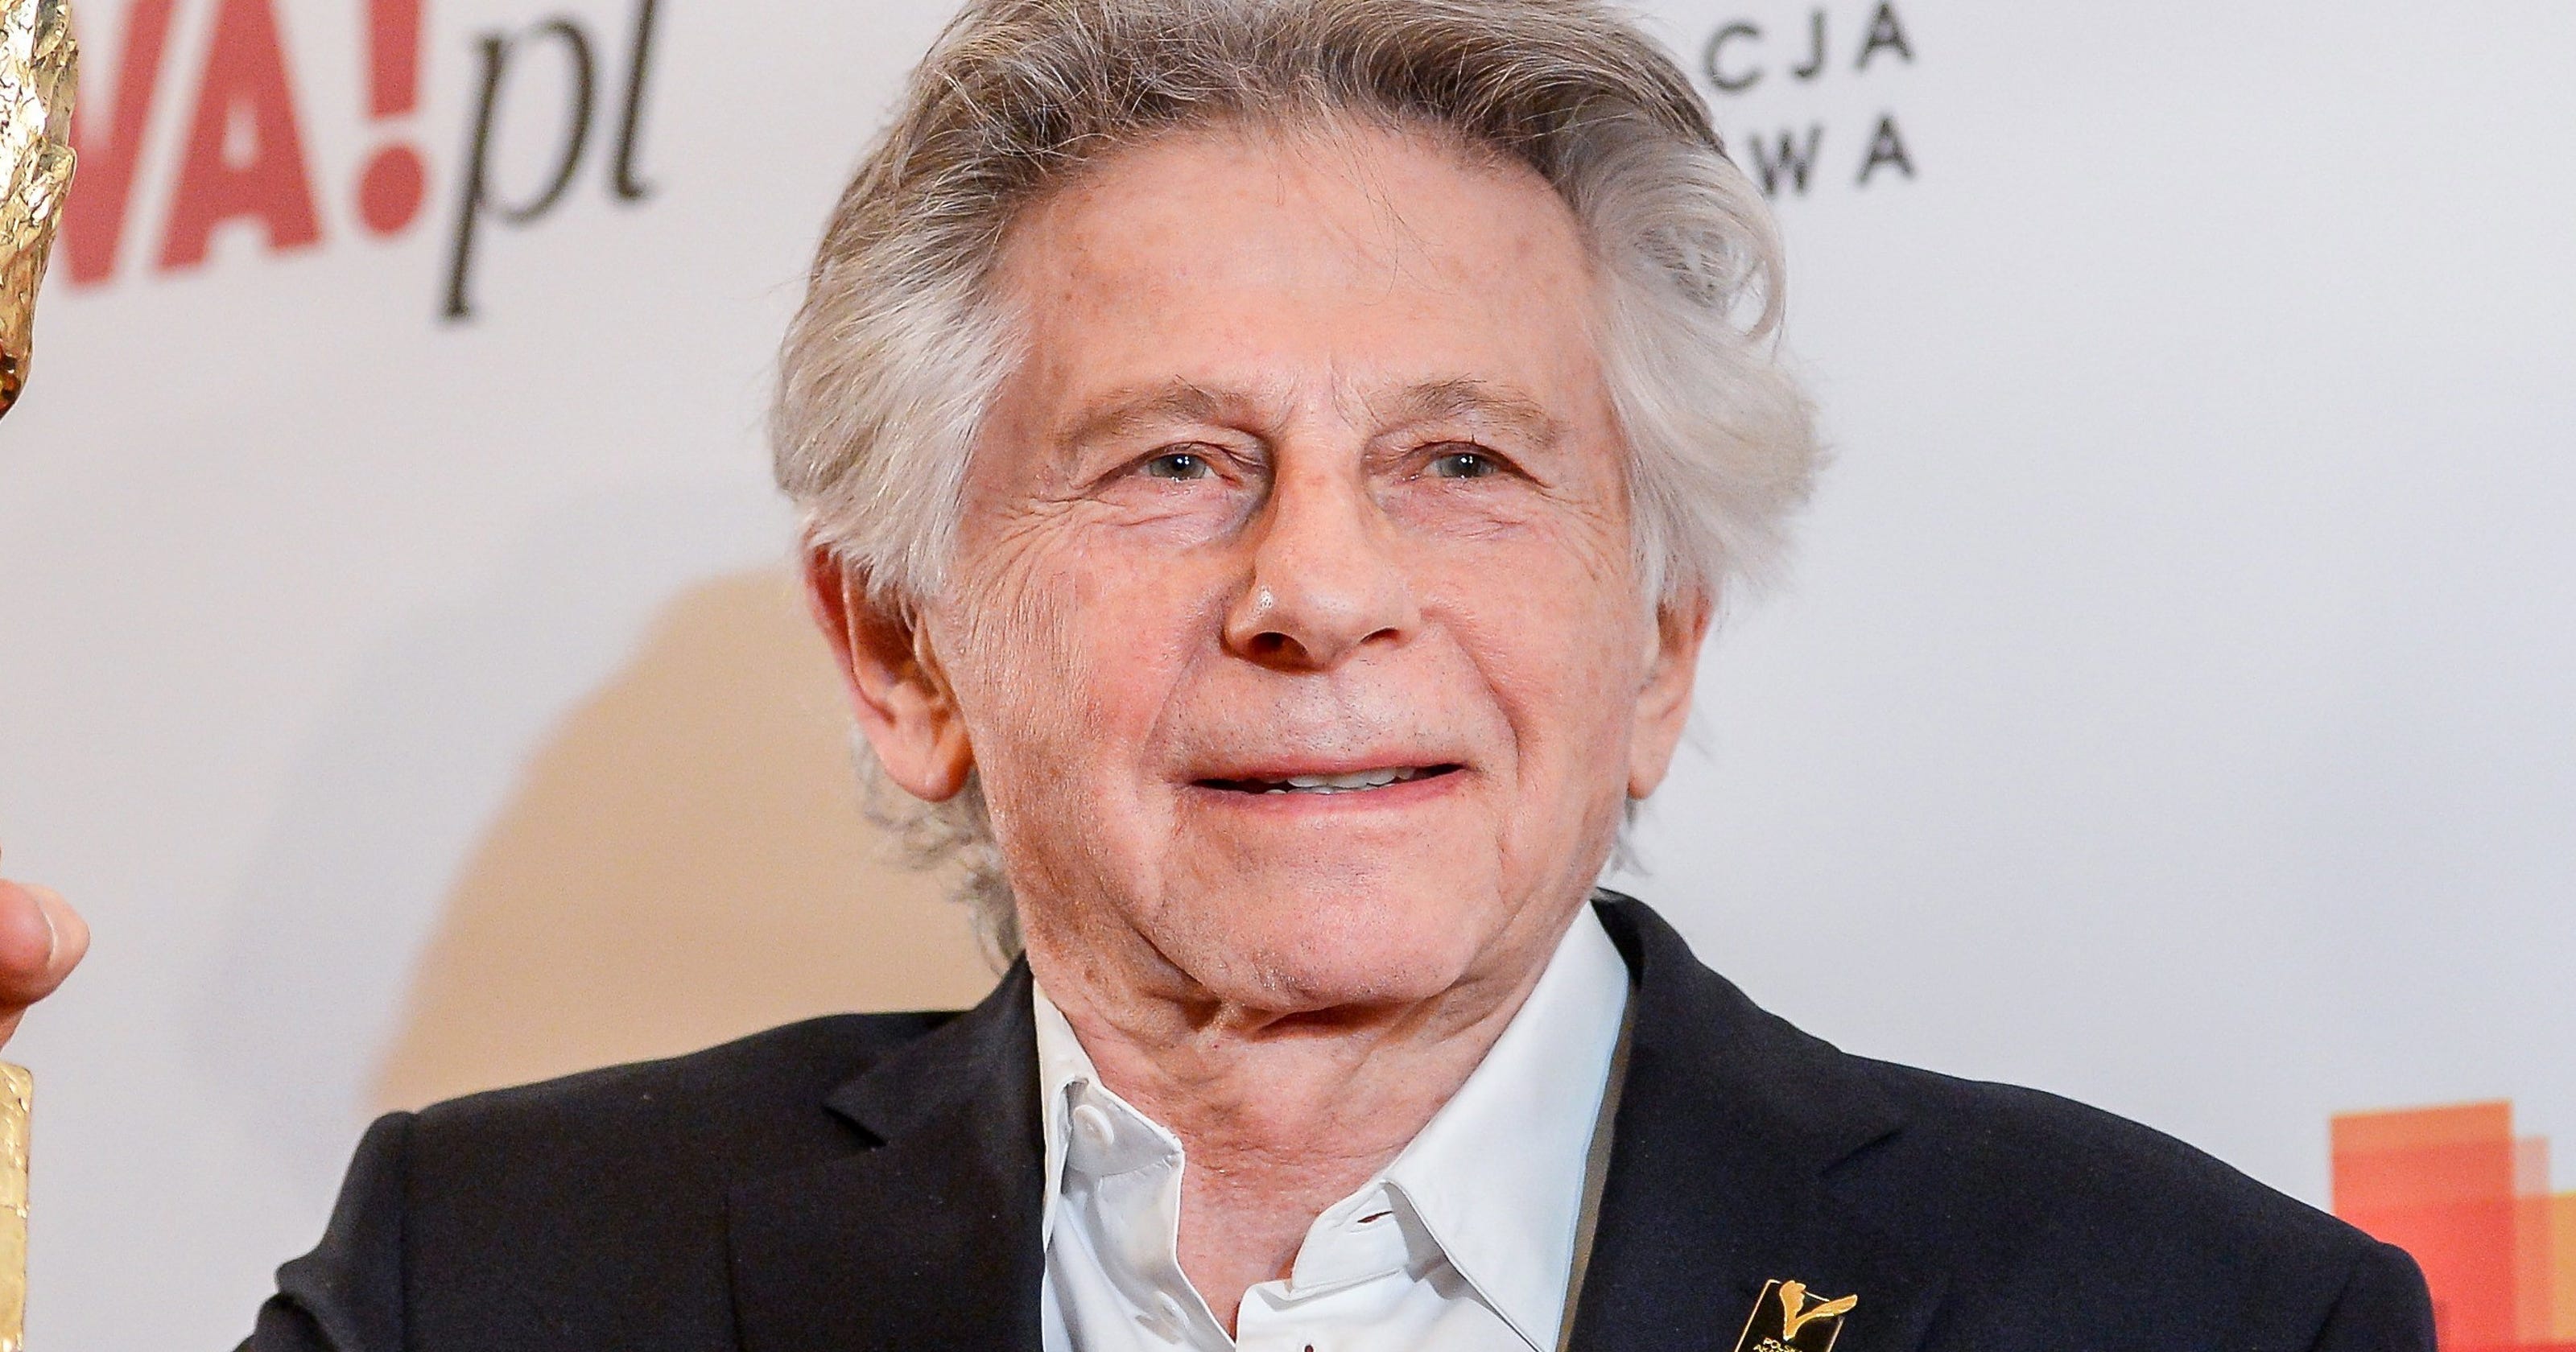 Roman Polanski sues Oscars academy over 'improper' expulsion